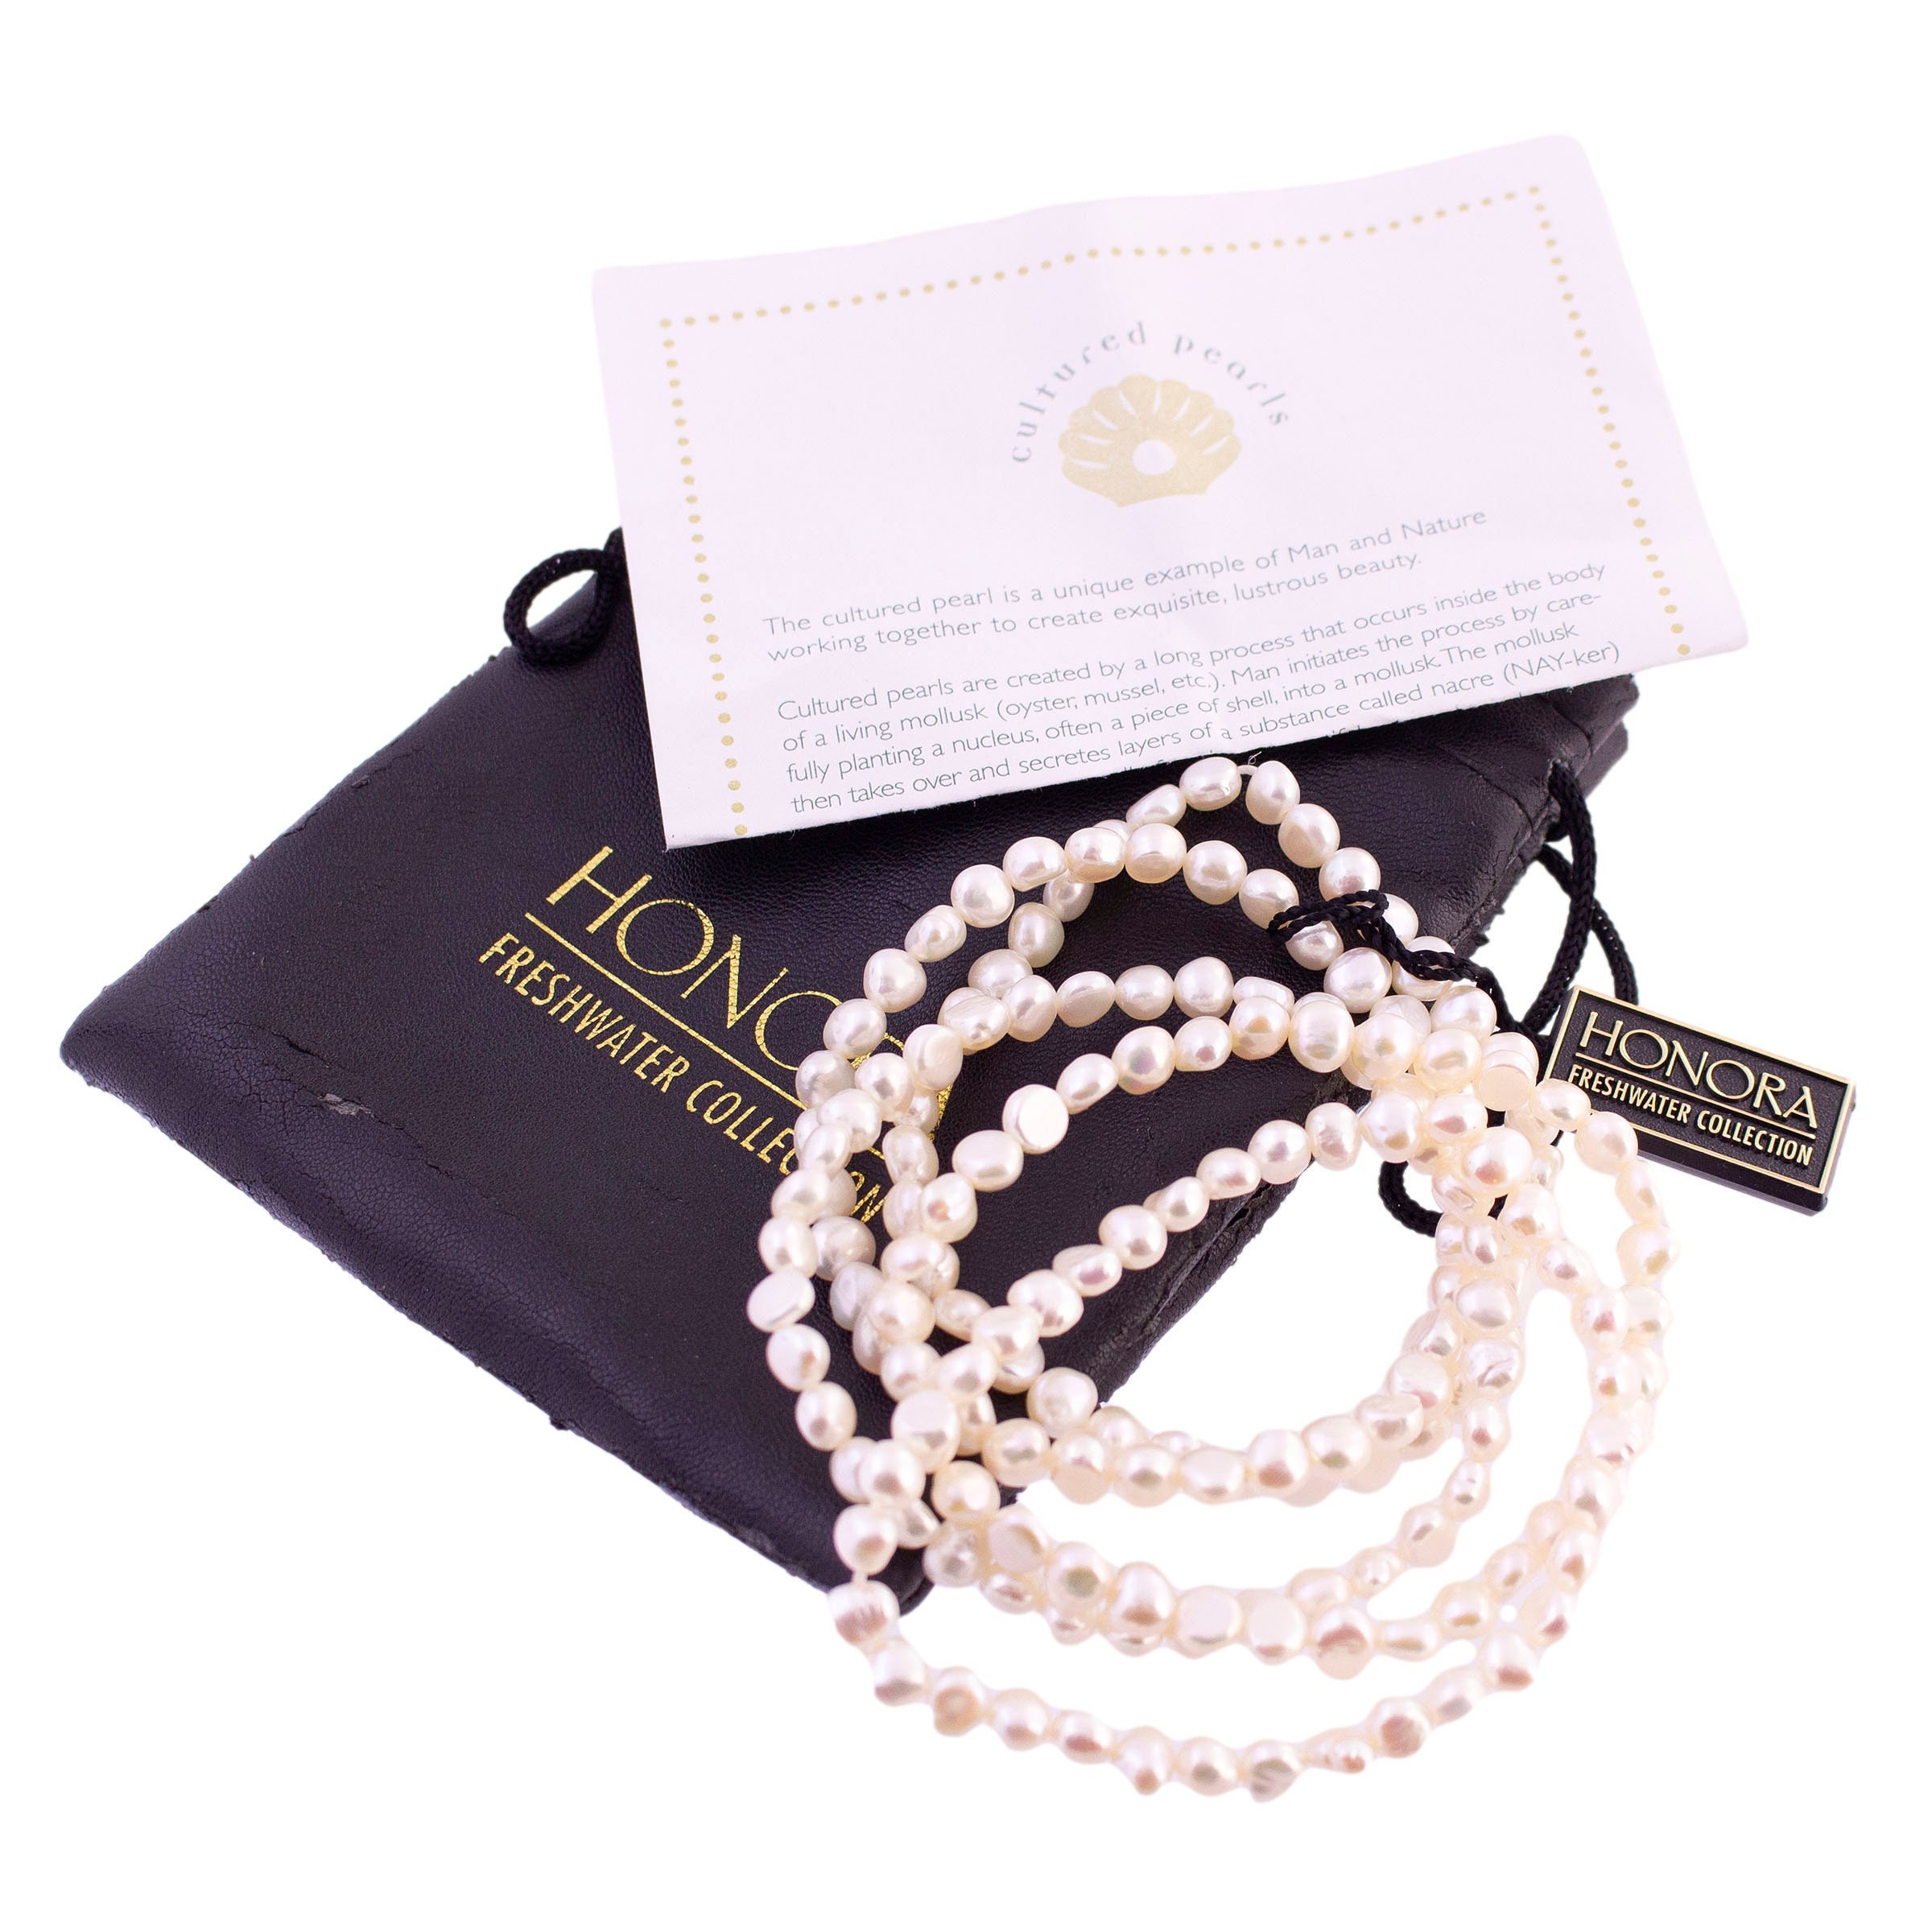  Aesthetic Pearl Bracelet for Women Korean Fashion Luxury Girl  Bracelet Jewelry Boho Accessories Items : Clothing, Shoes & Jewelry